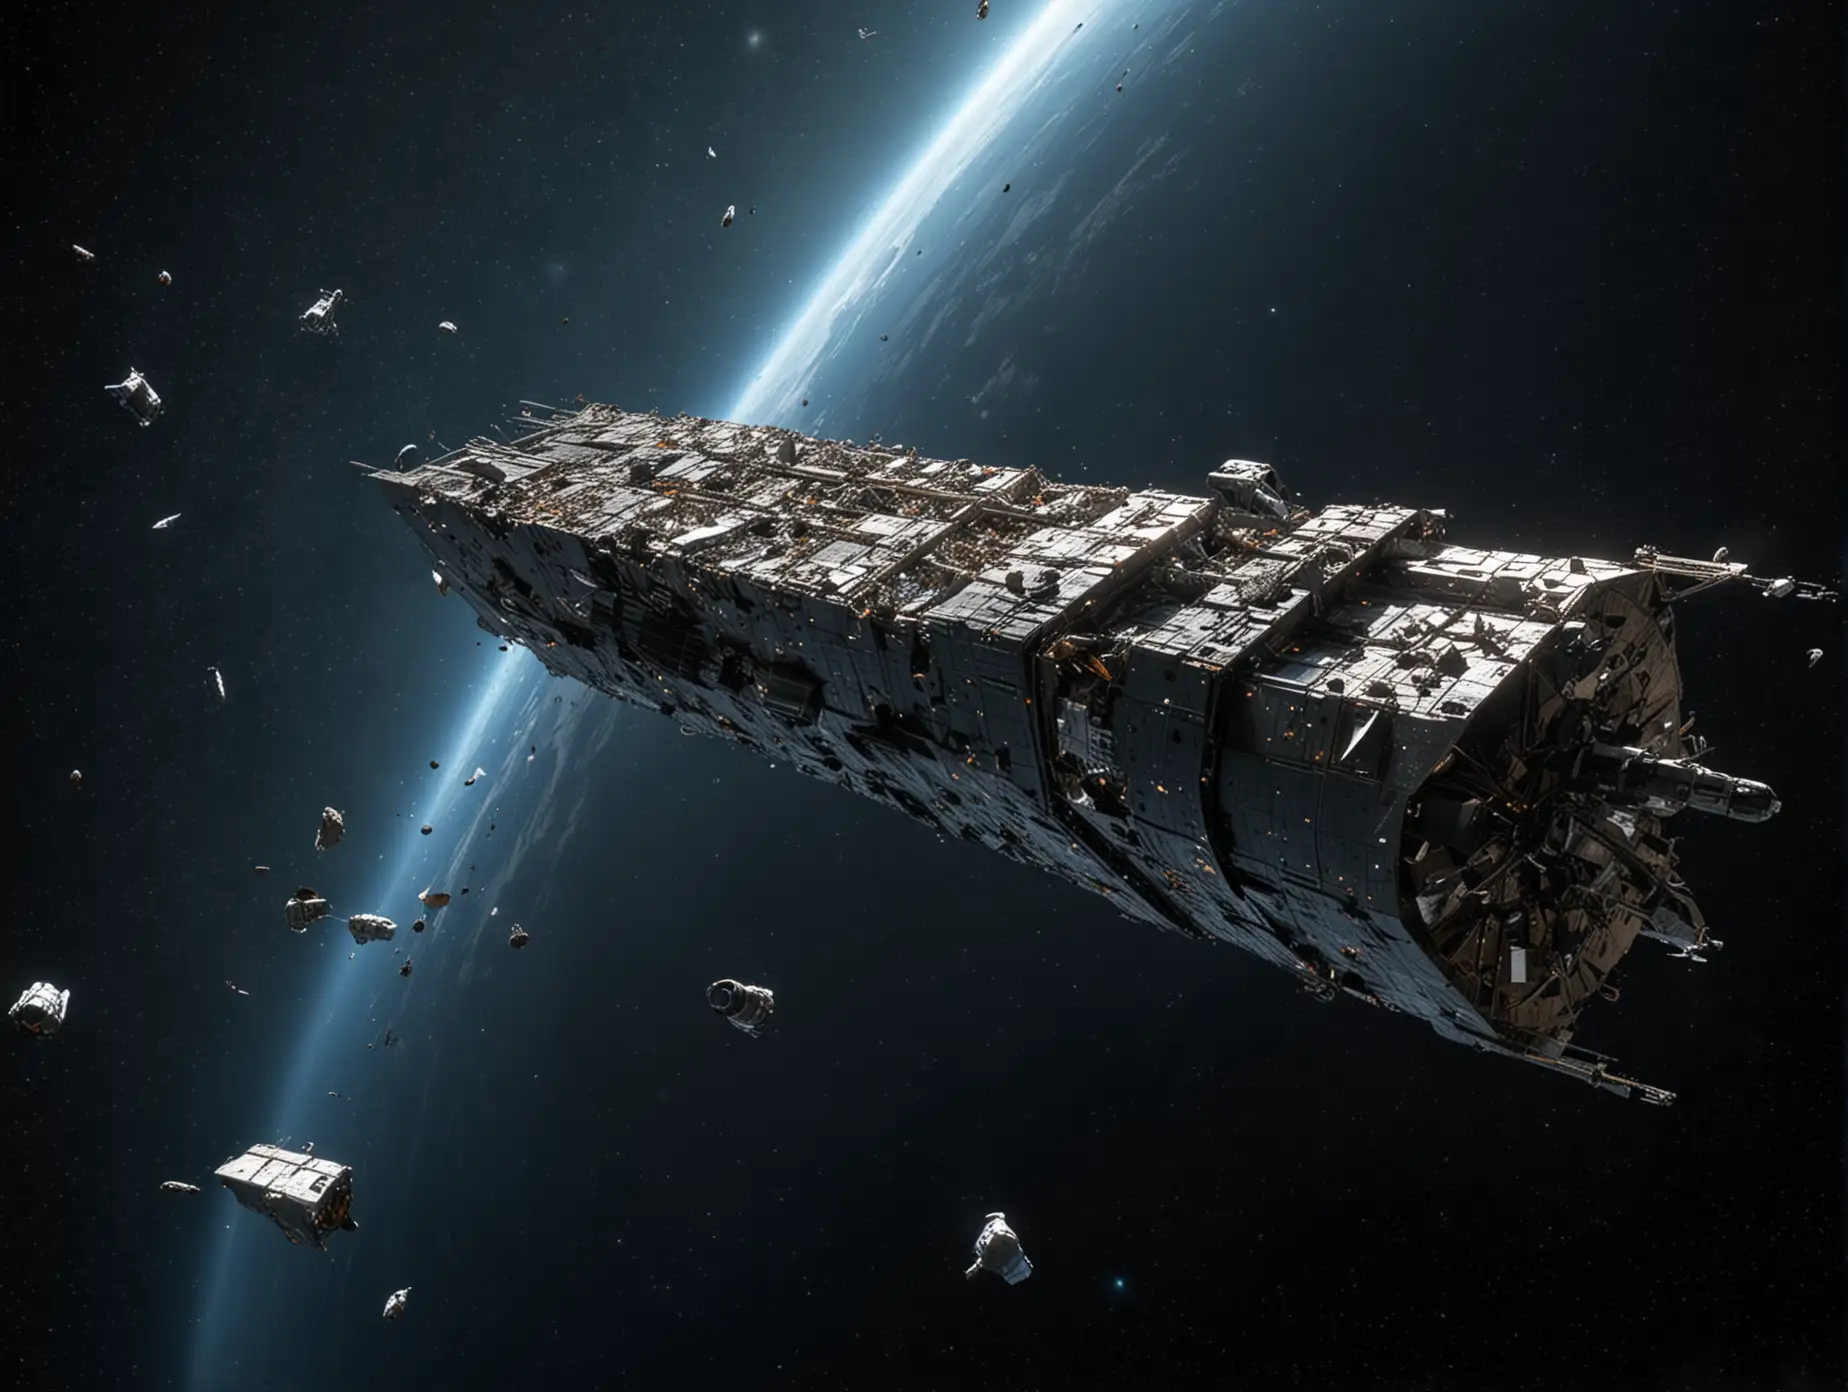 ship collecting space debris, in space, large long rectangular ship